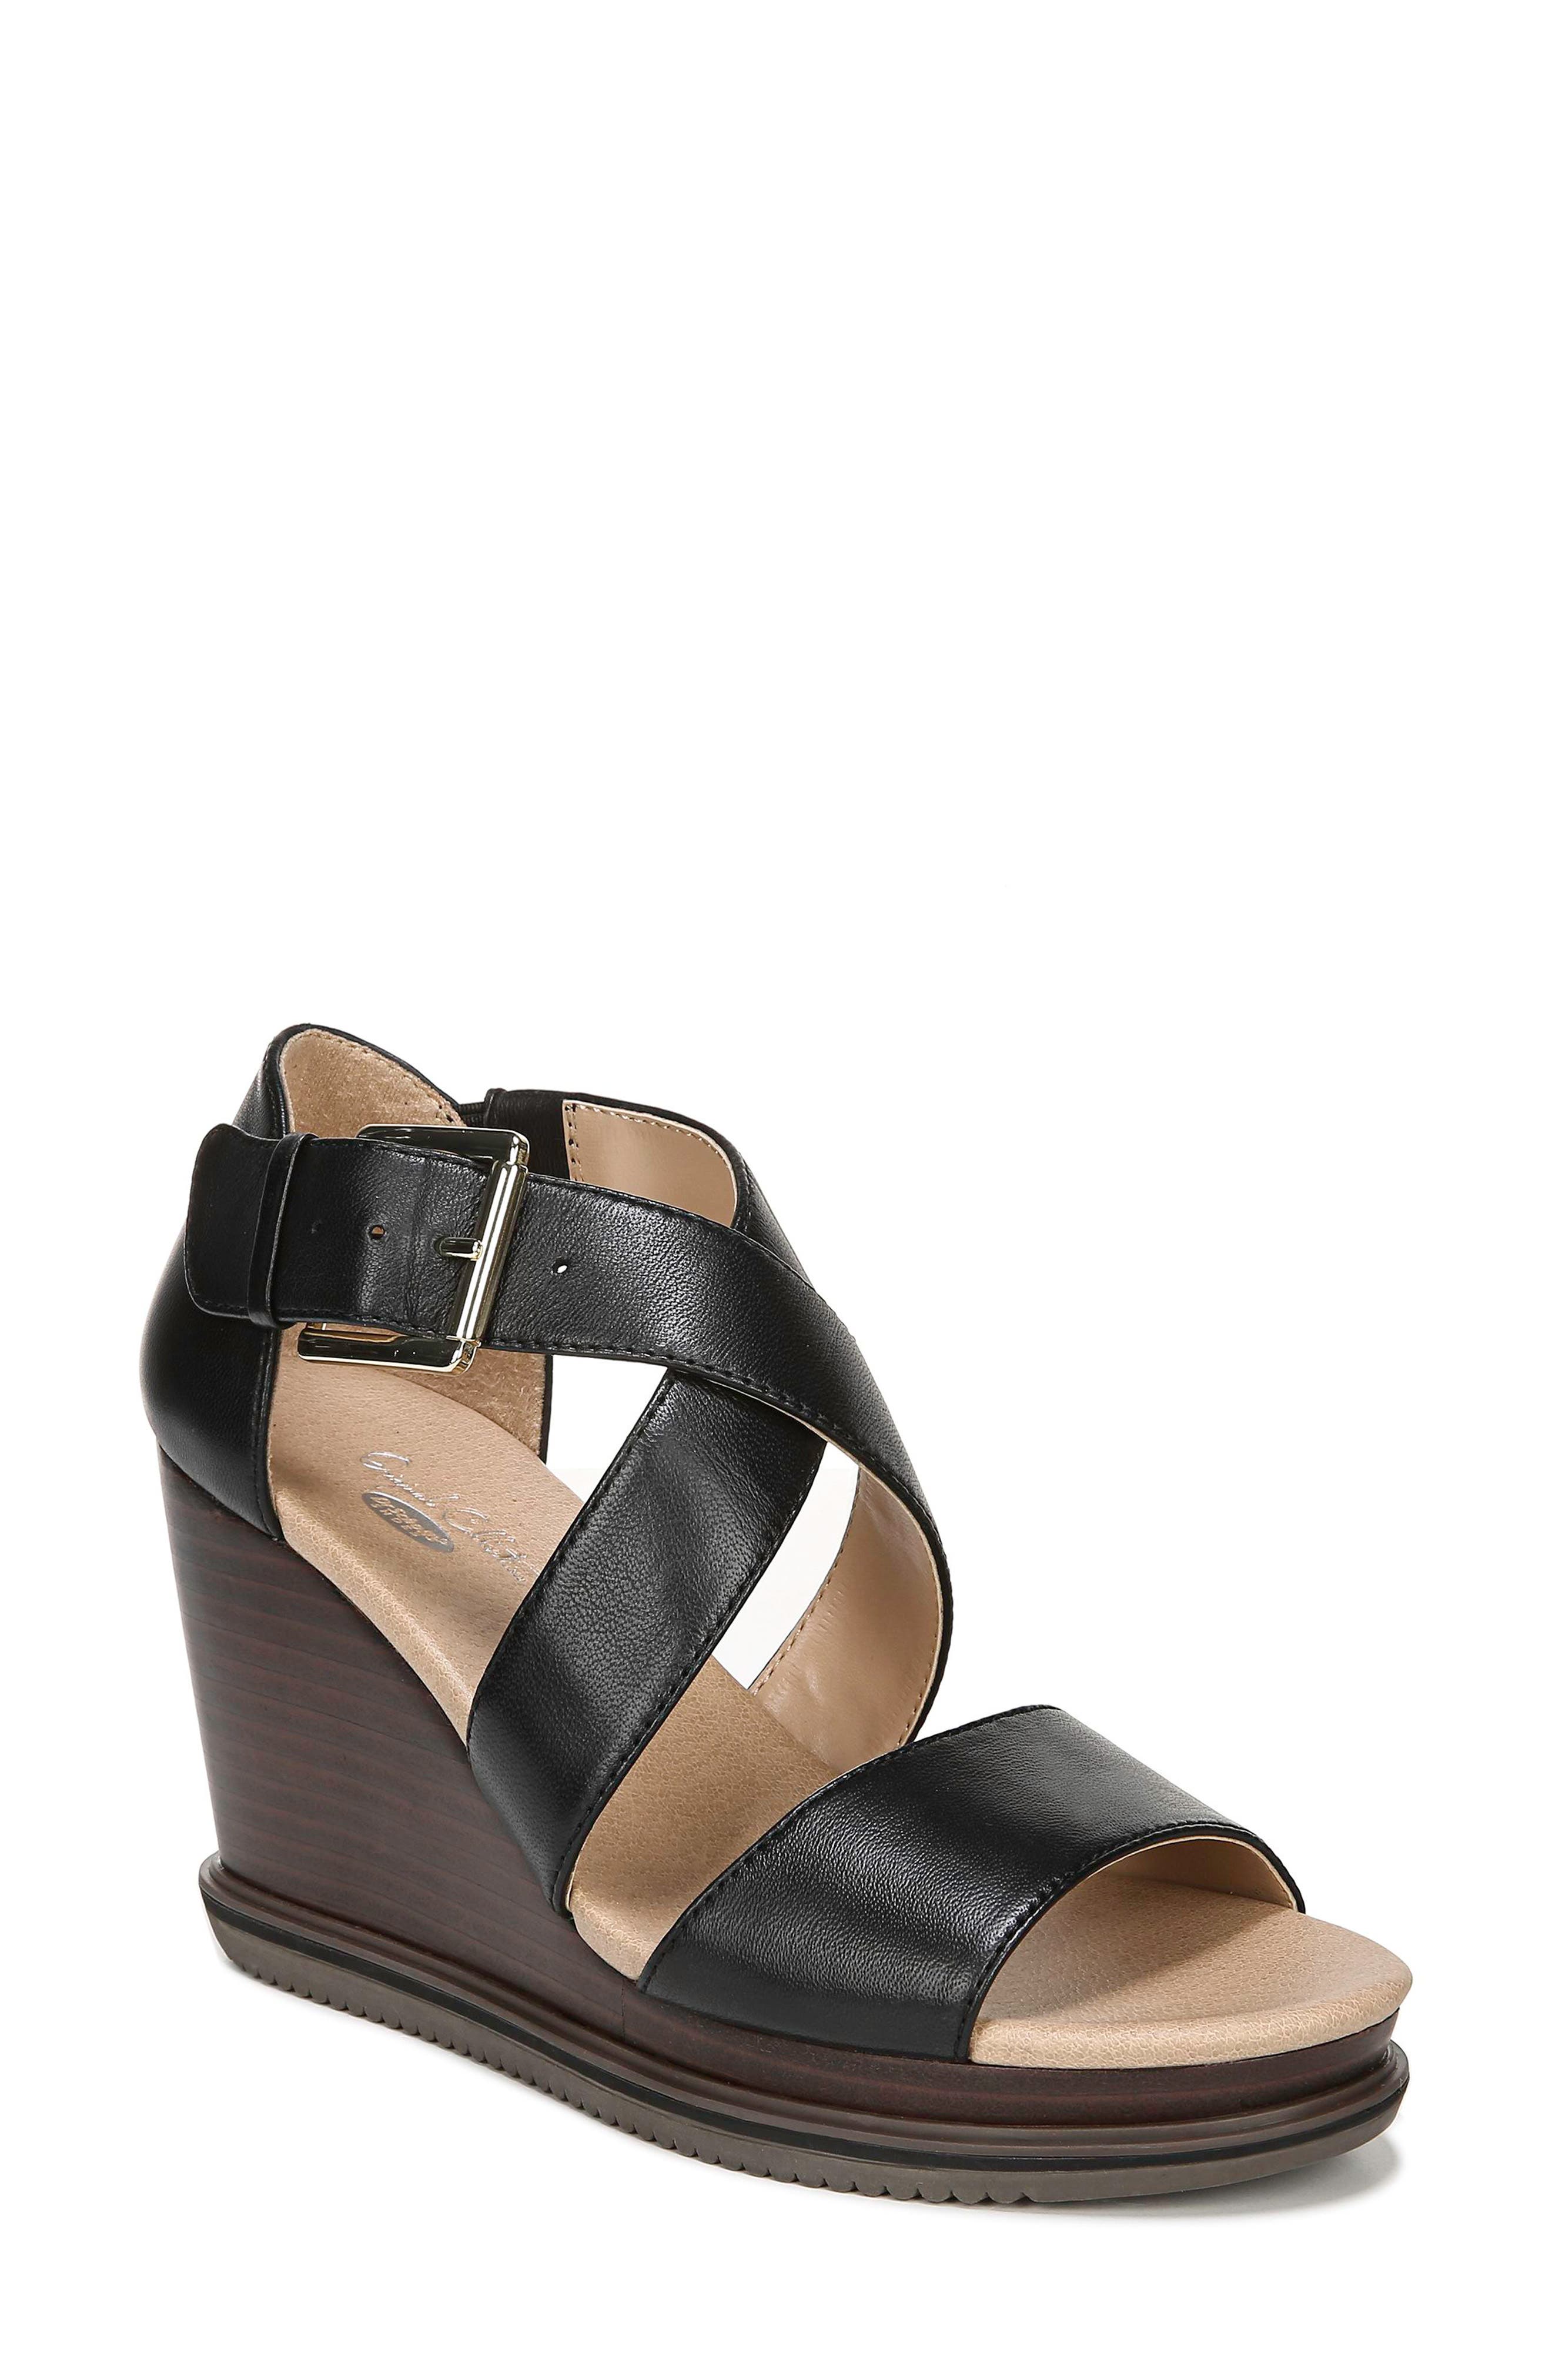 UPC 742976000065 product image for Women's Dr. Scholl's Sweet Escape Wedge Sandal, Size 7 M - Black | upcitemdb.com